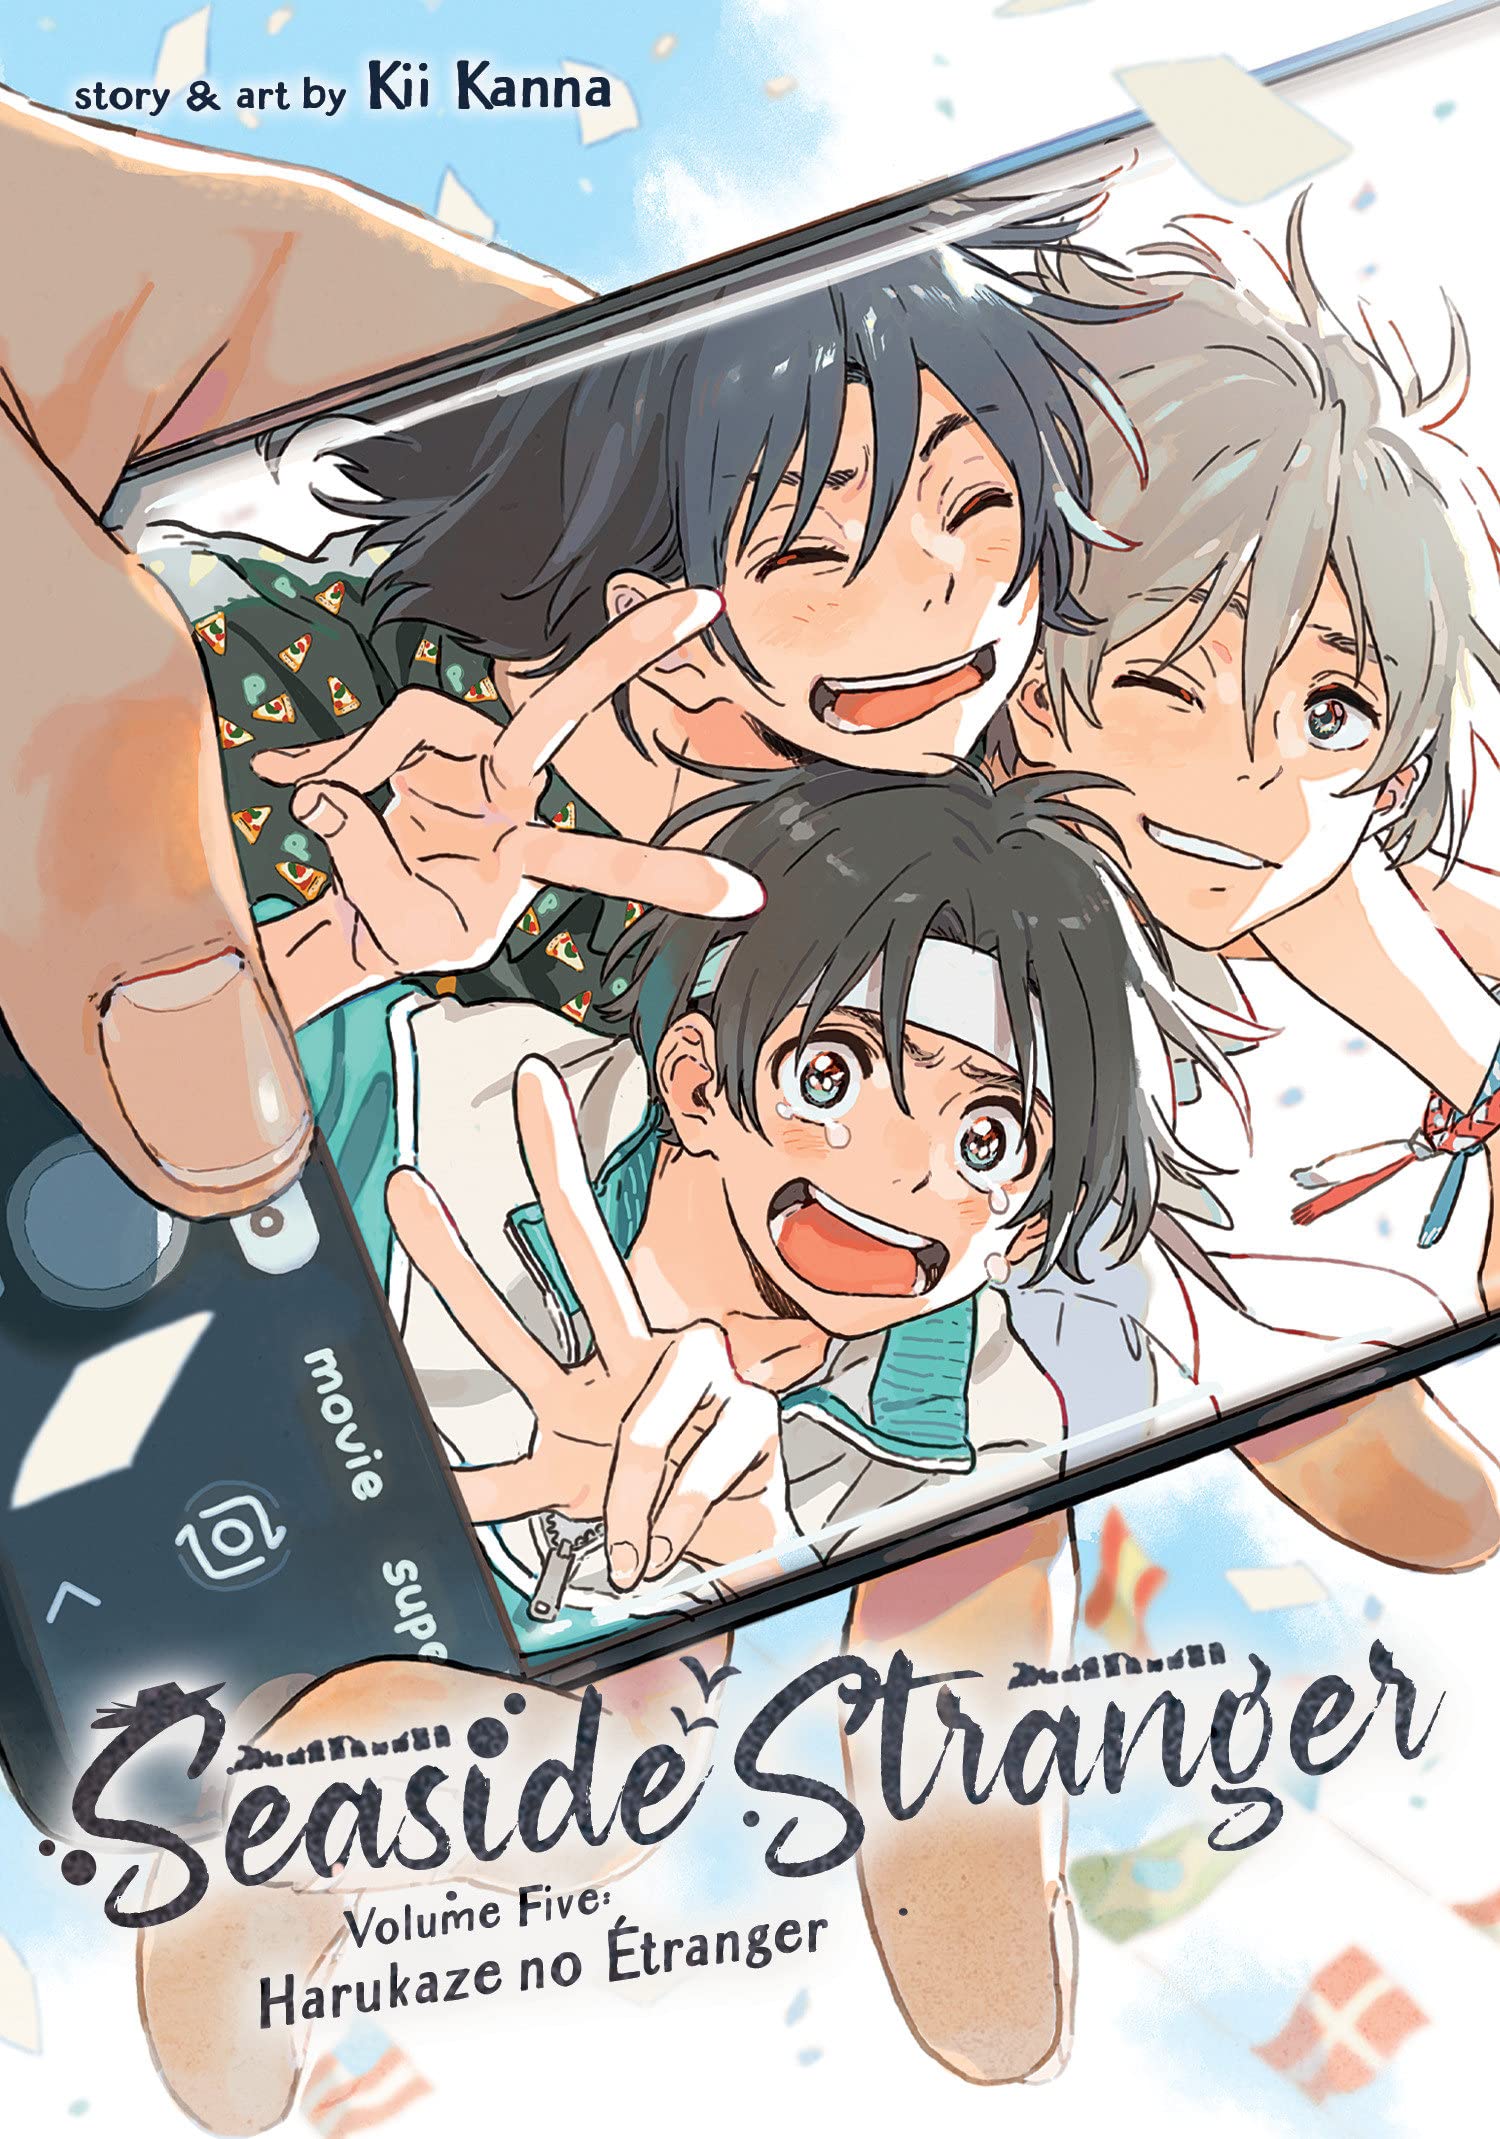 Seaside Stranger - Volume 5 | Kii Kanna